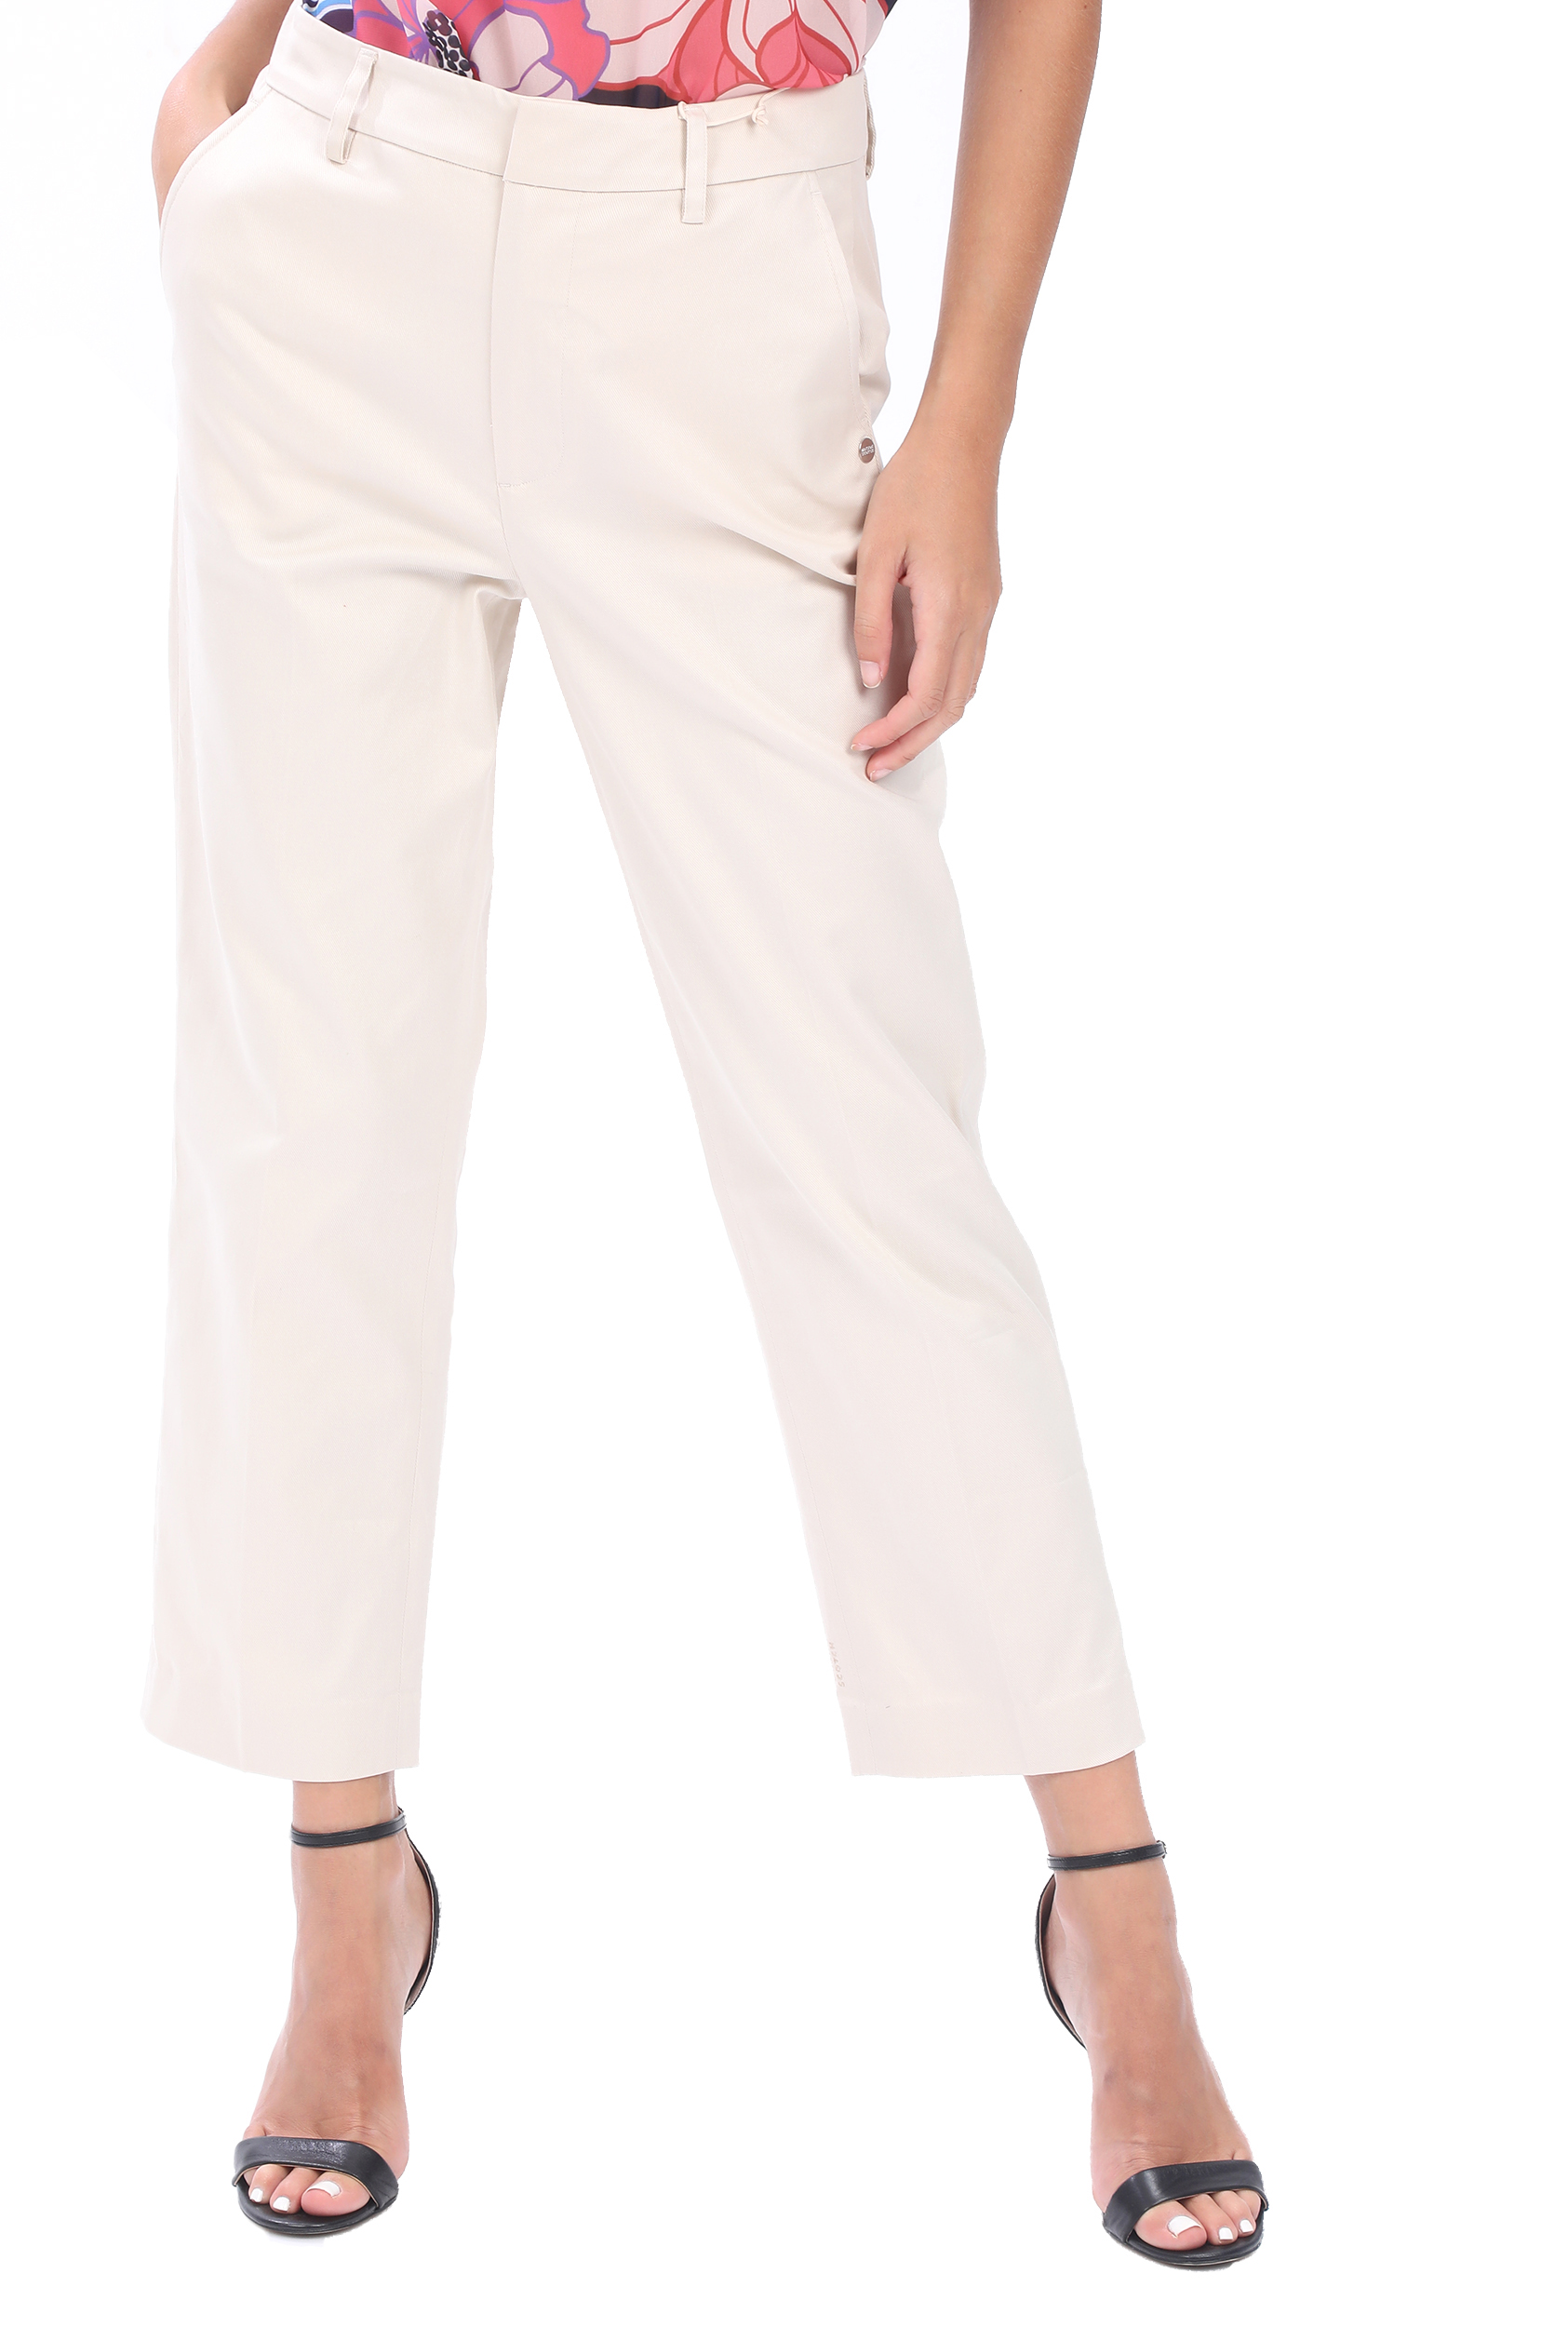 SCOTCH & SODA – Γυναικείο chino παντελόνι SCOTCH & SODA Abott λευκό 1809261.0-9090